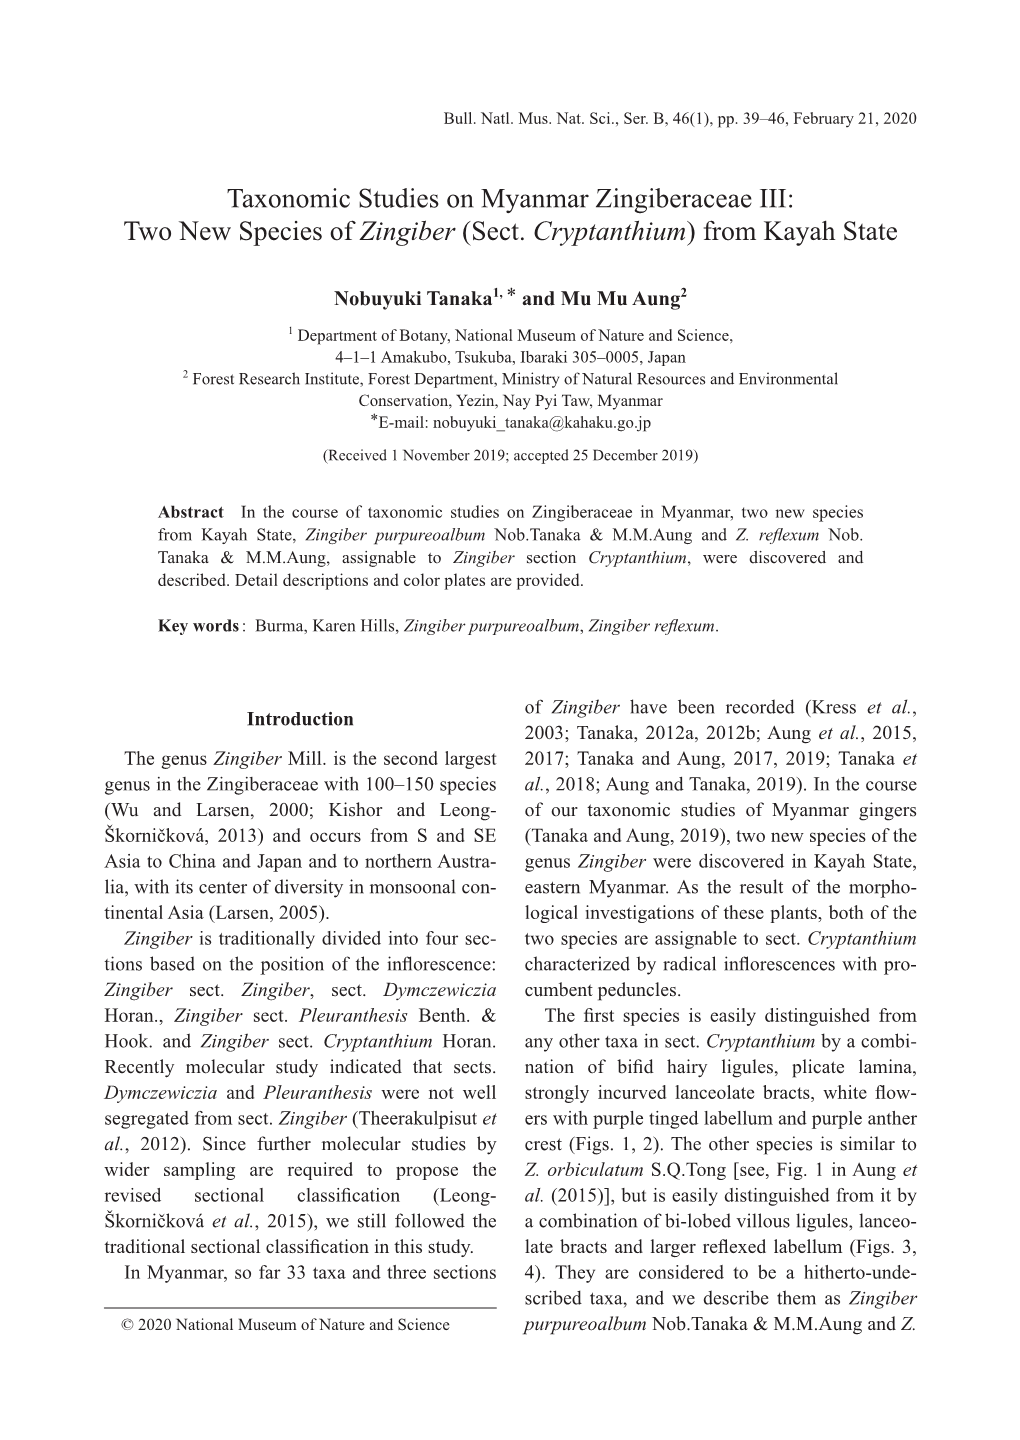 Taxonomic Studies on Myanmar Zingiberaceae III: Two New Species of Zingiber (Sect. Cryptanthium) from Kayah State